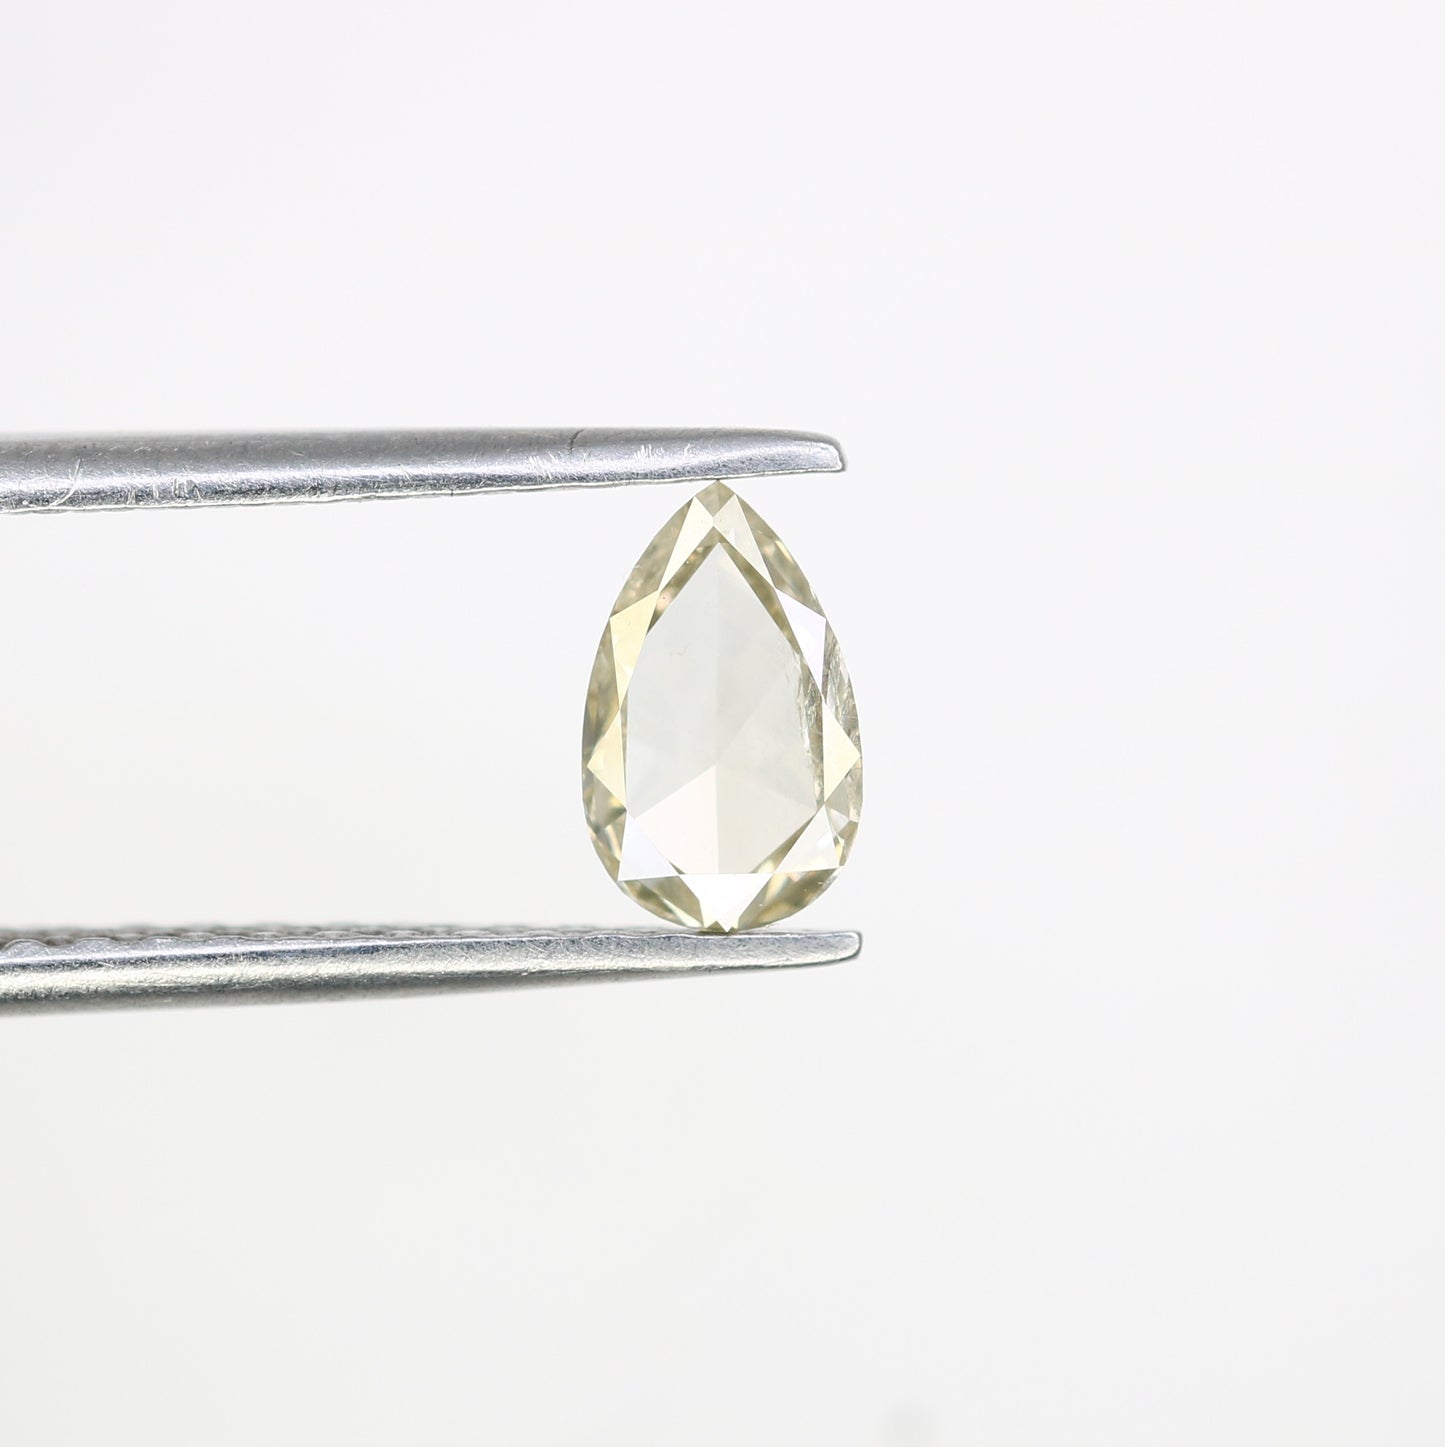 0.57 Fancy Light Yellow Loose Pear Shape Diamond For Galaxy Ring